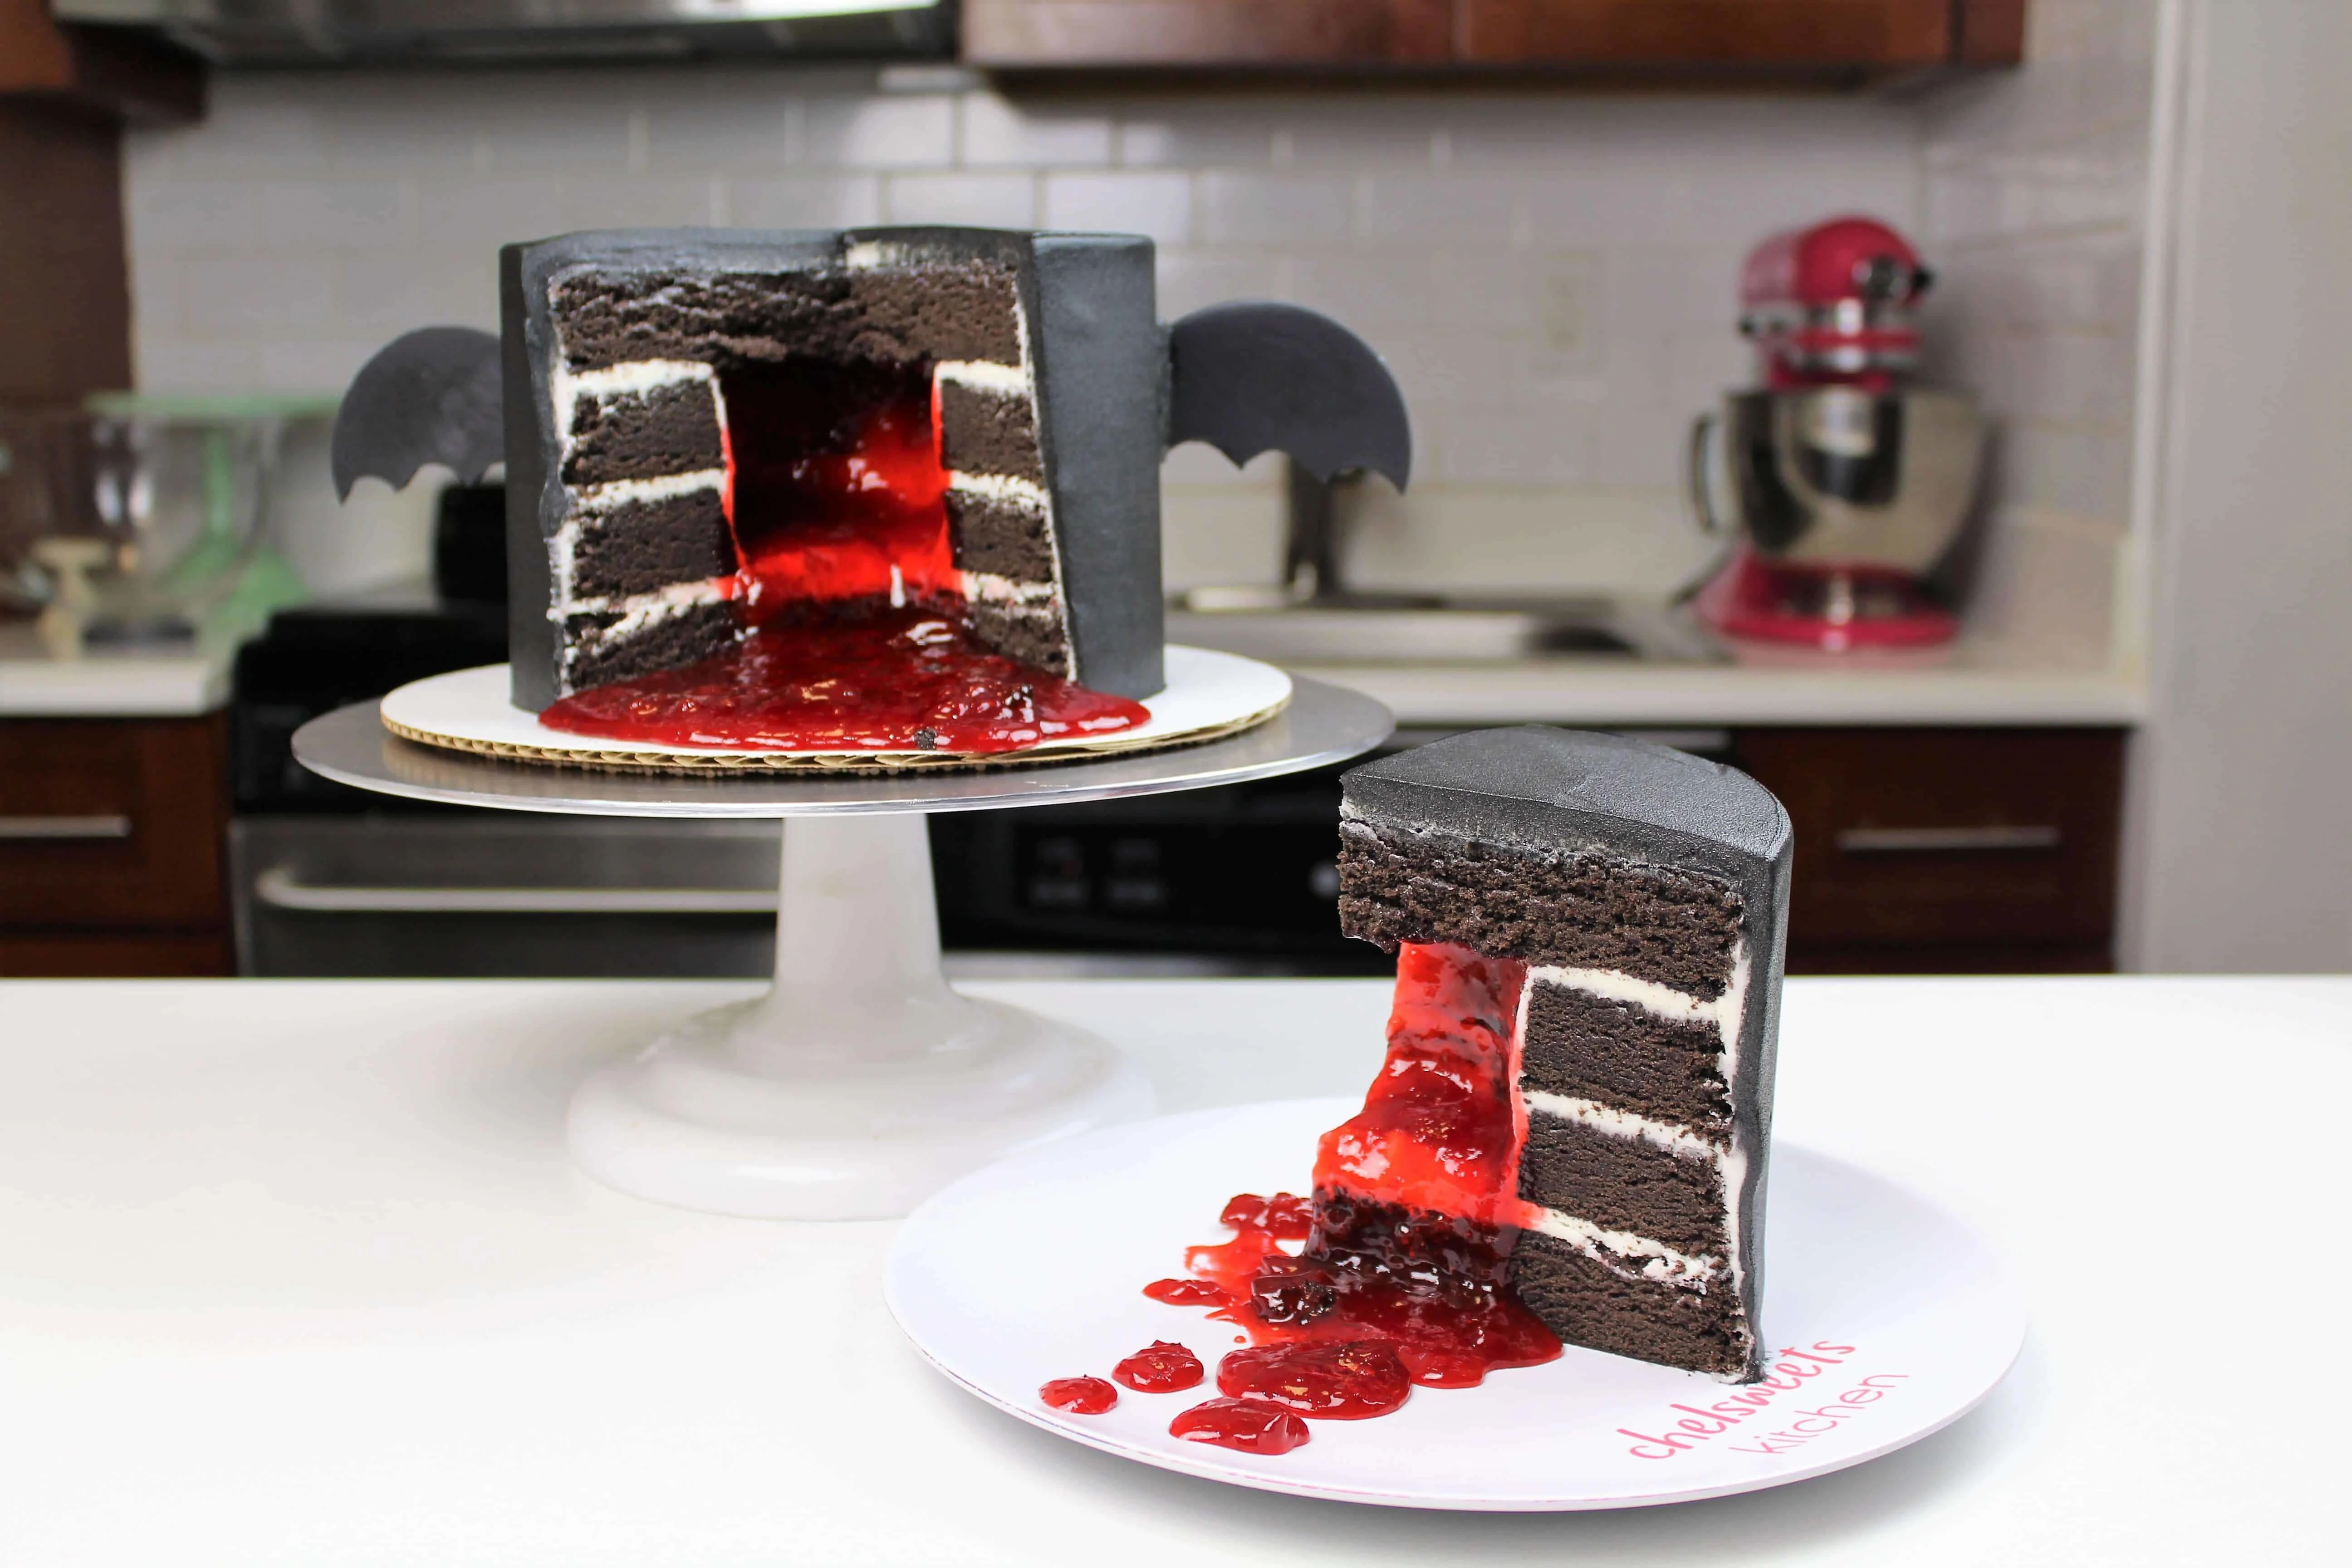 image of sliced vampire bat cake with strawberry jam filling